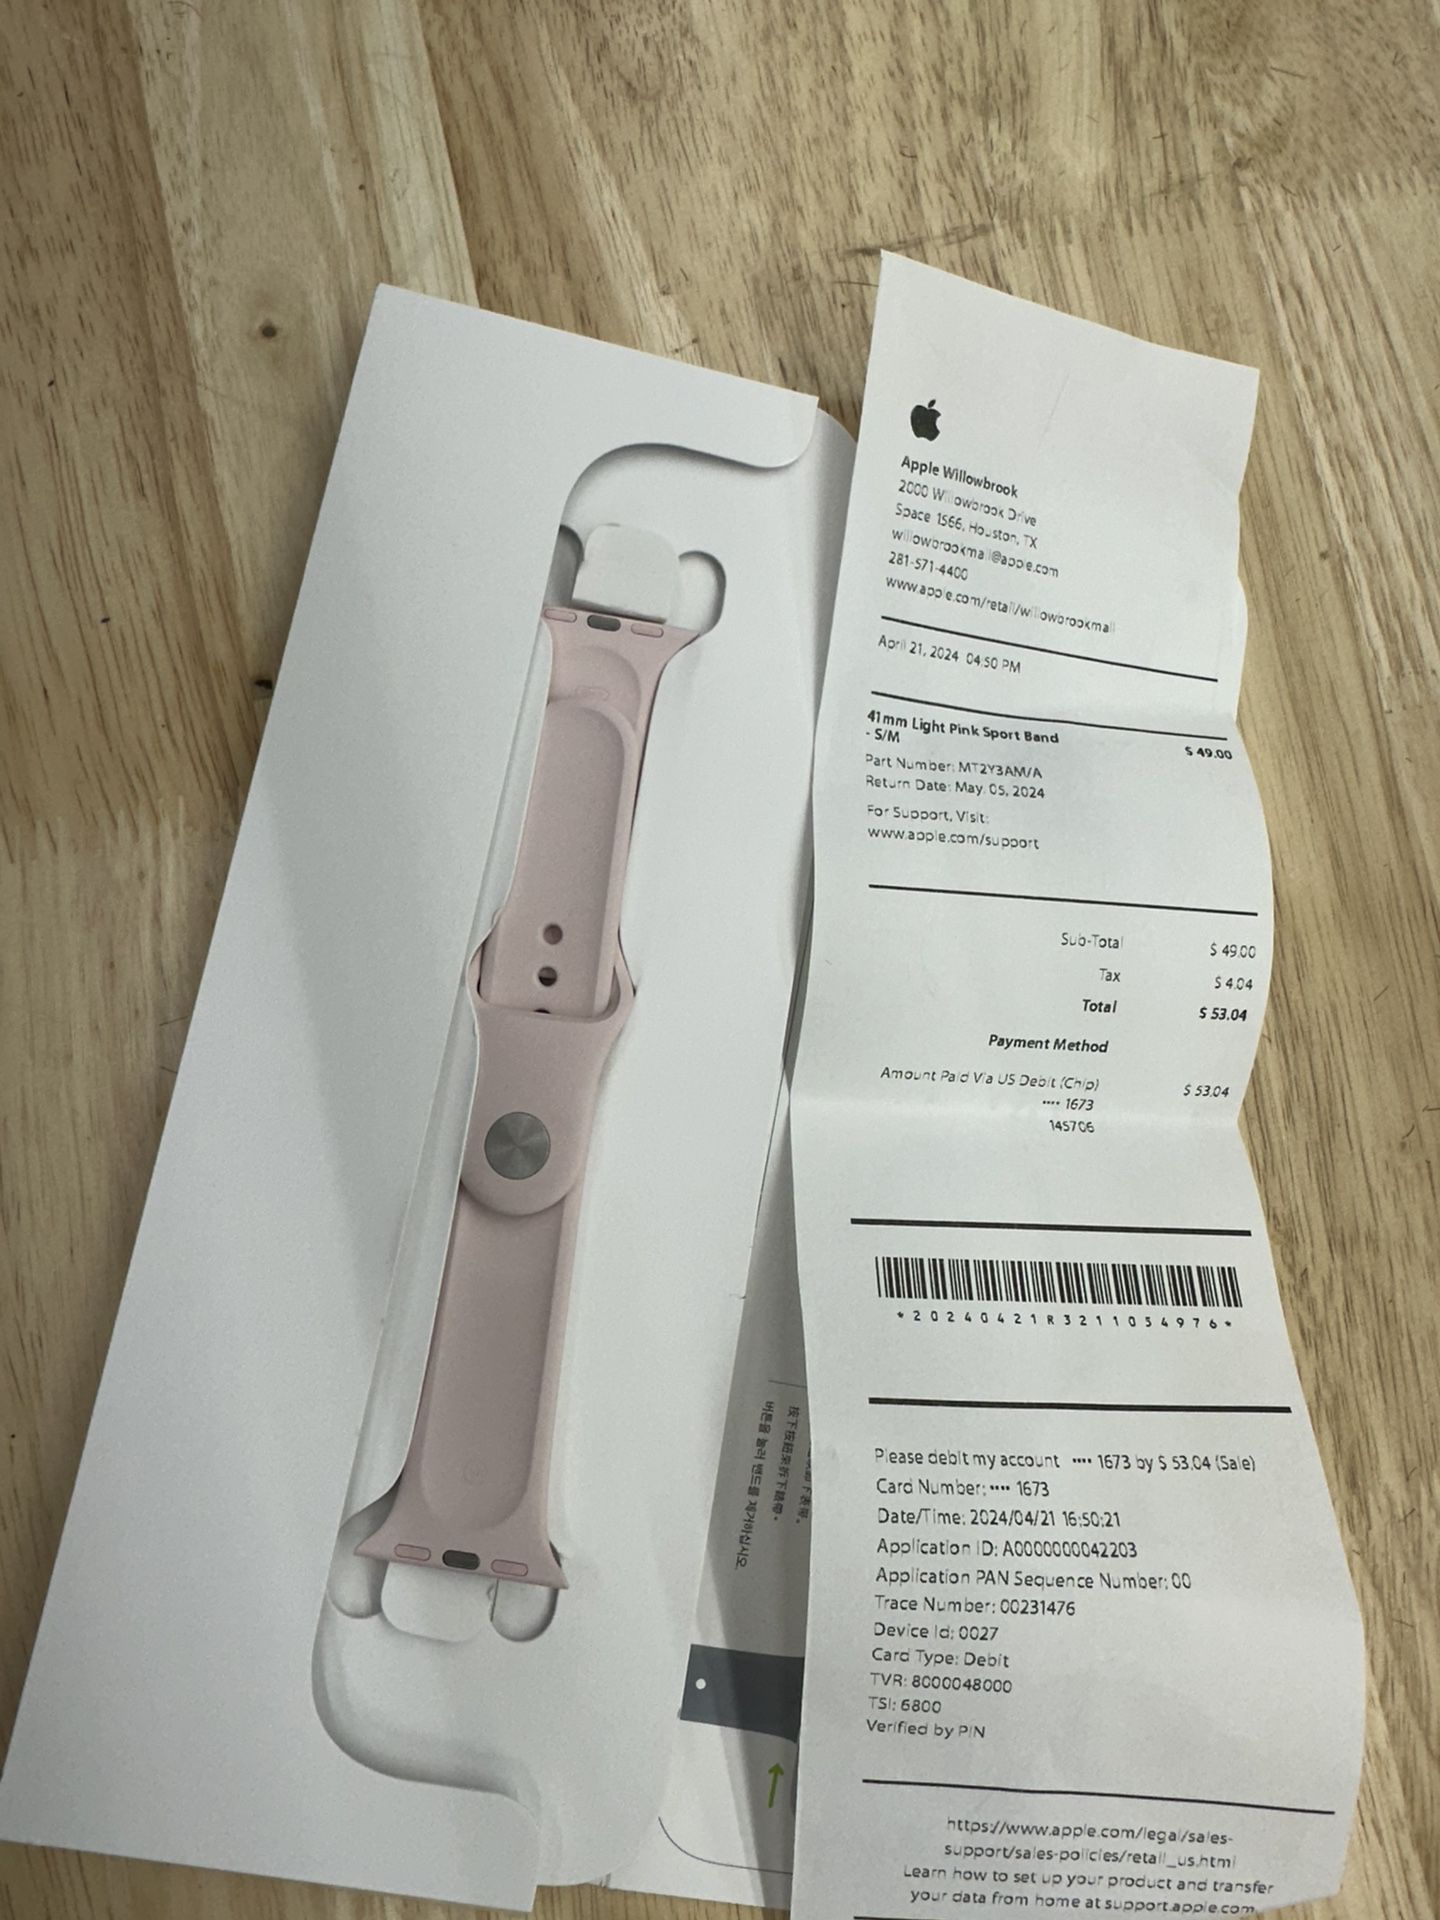 Apple Watch Band Size M/L 